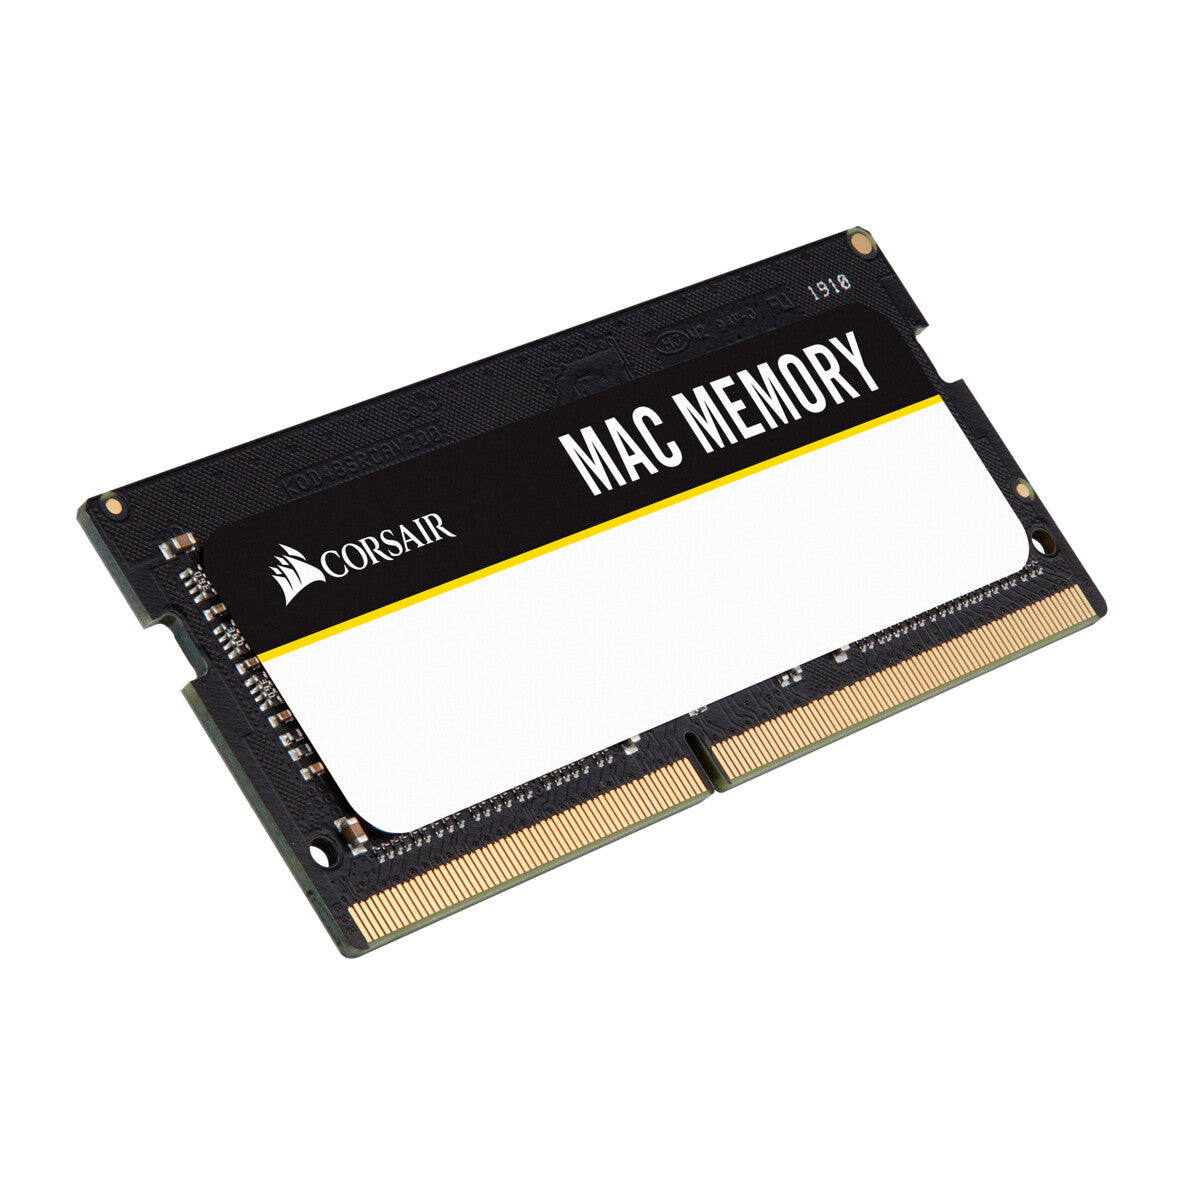 Corsair Mac Memory - 32 GB 2 x 16 GB DDR4 2666 MHz memory module